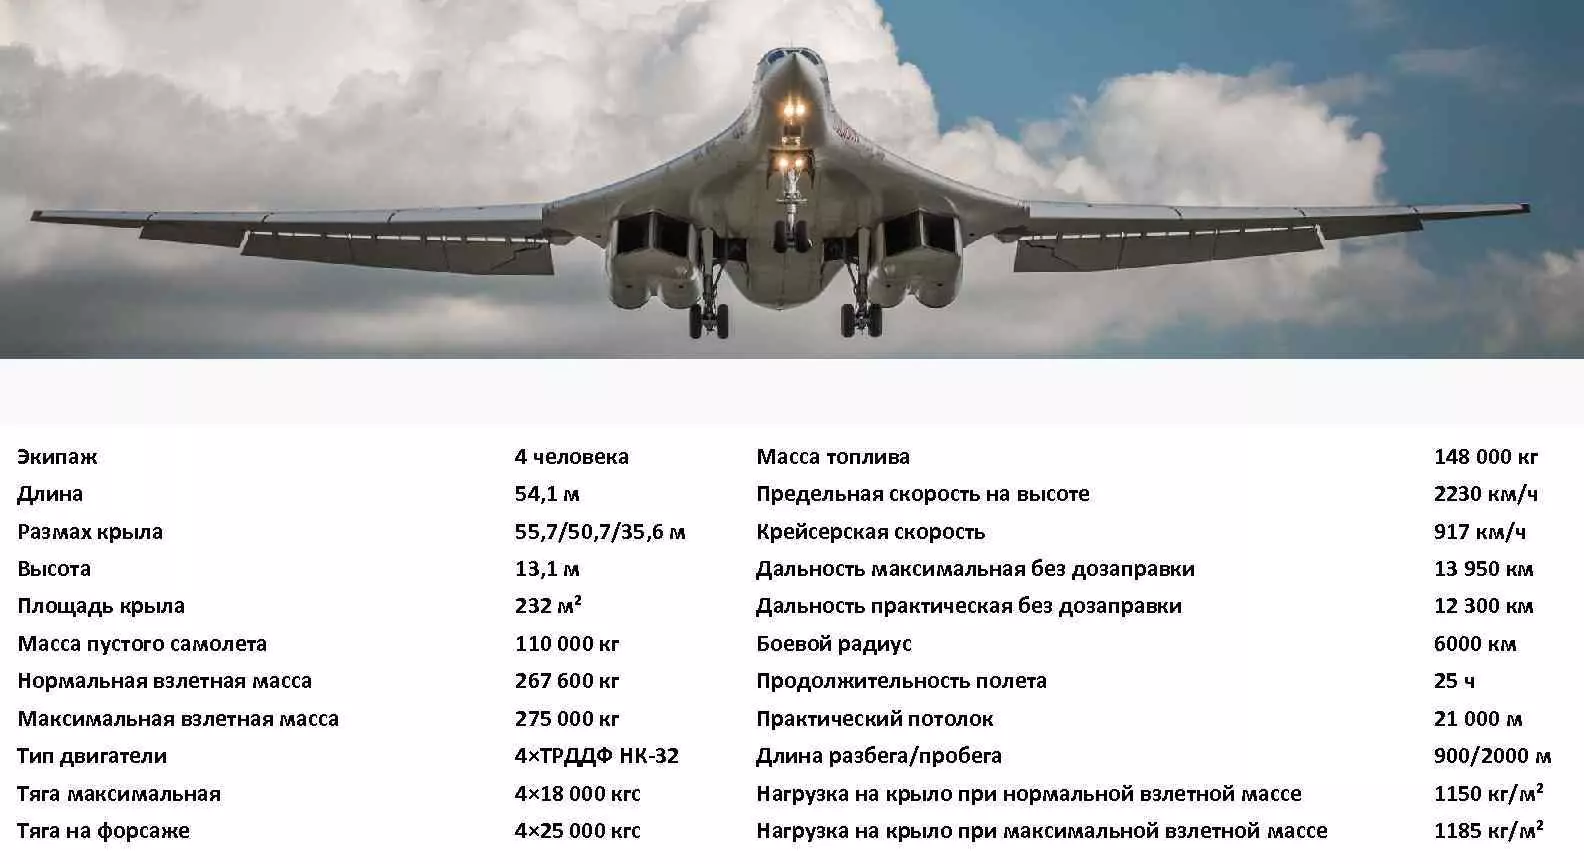 Туполев ту-160 - tupolev tu-160 - abcdef.wiki